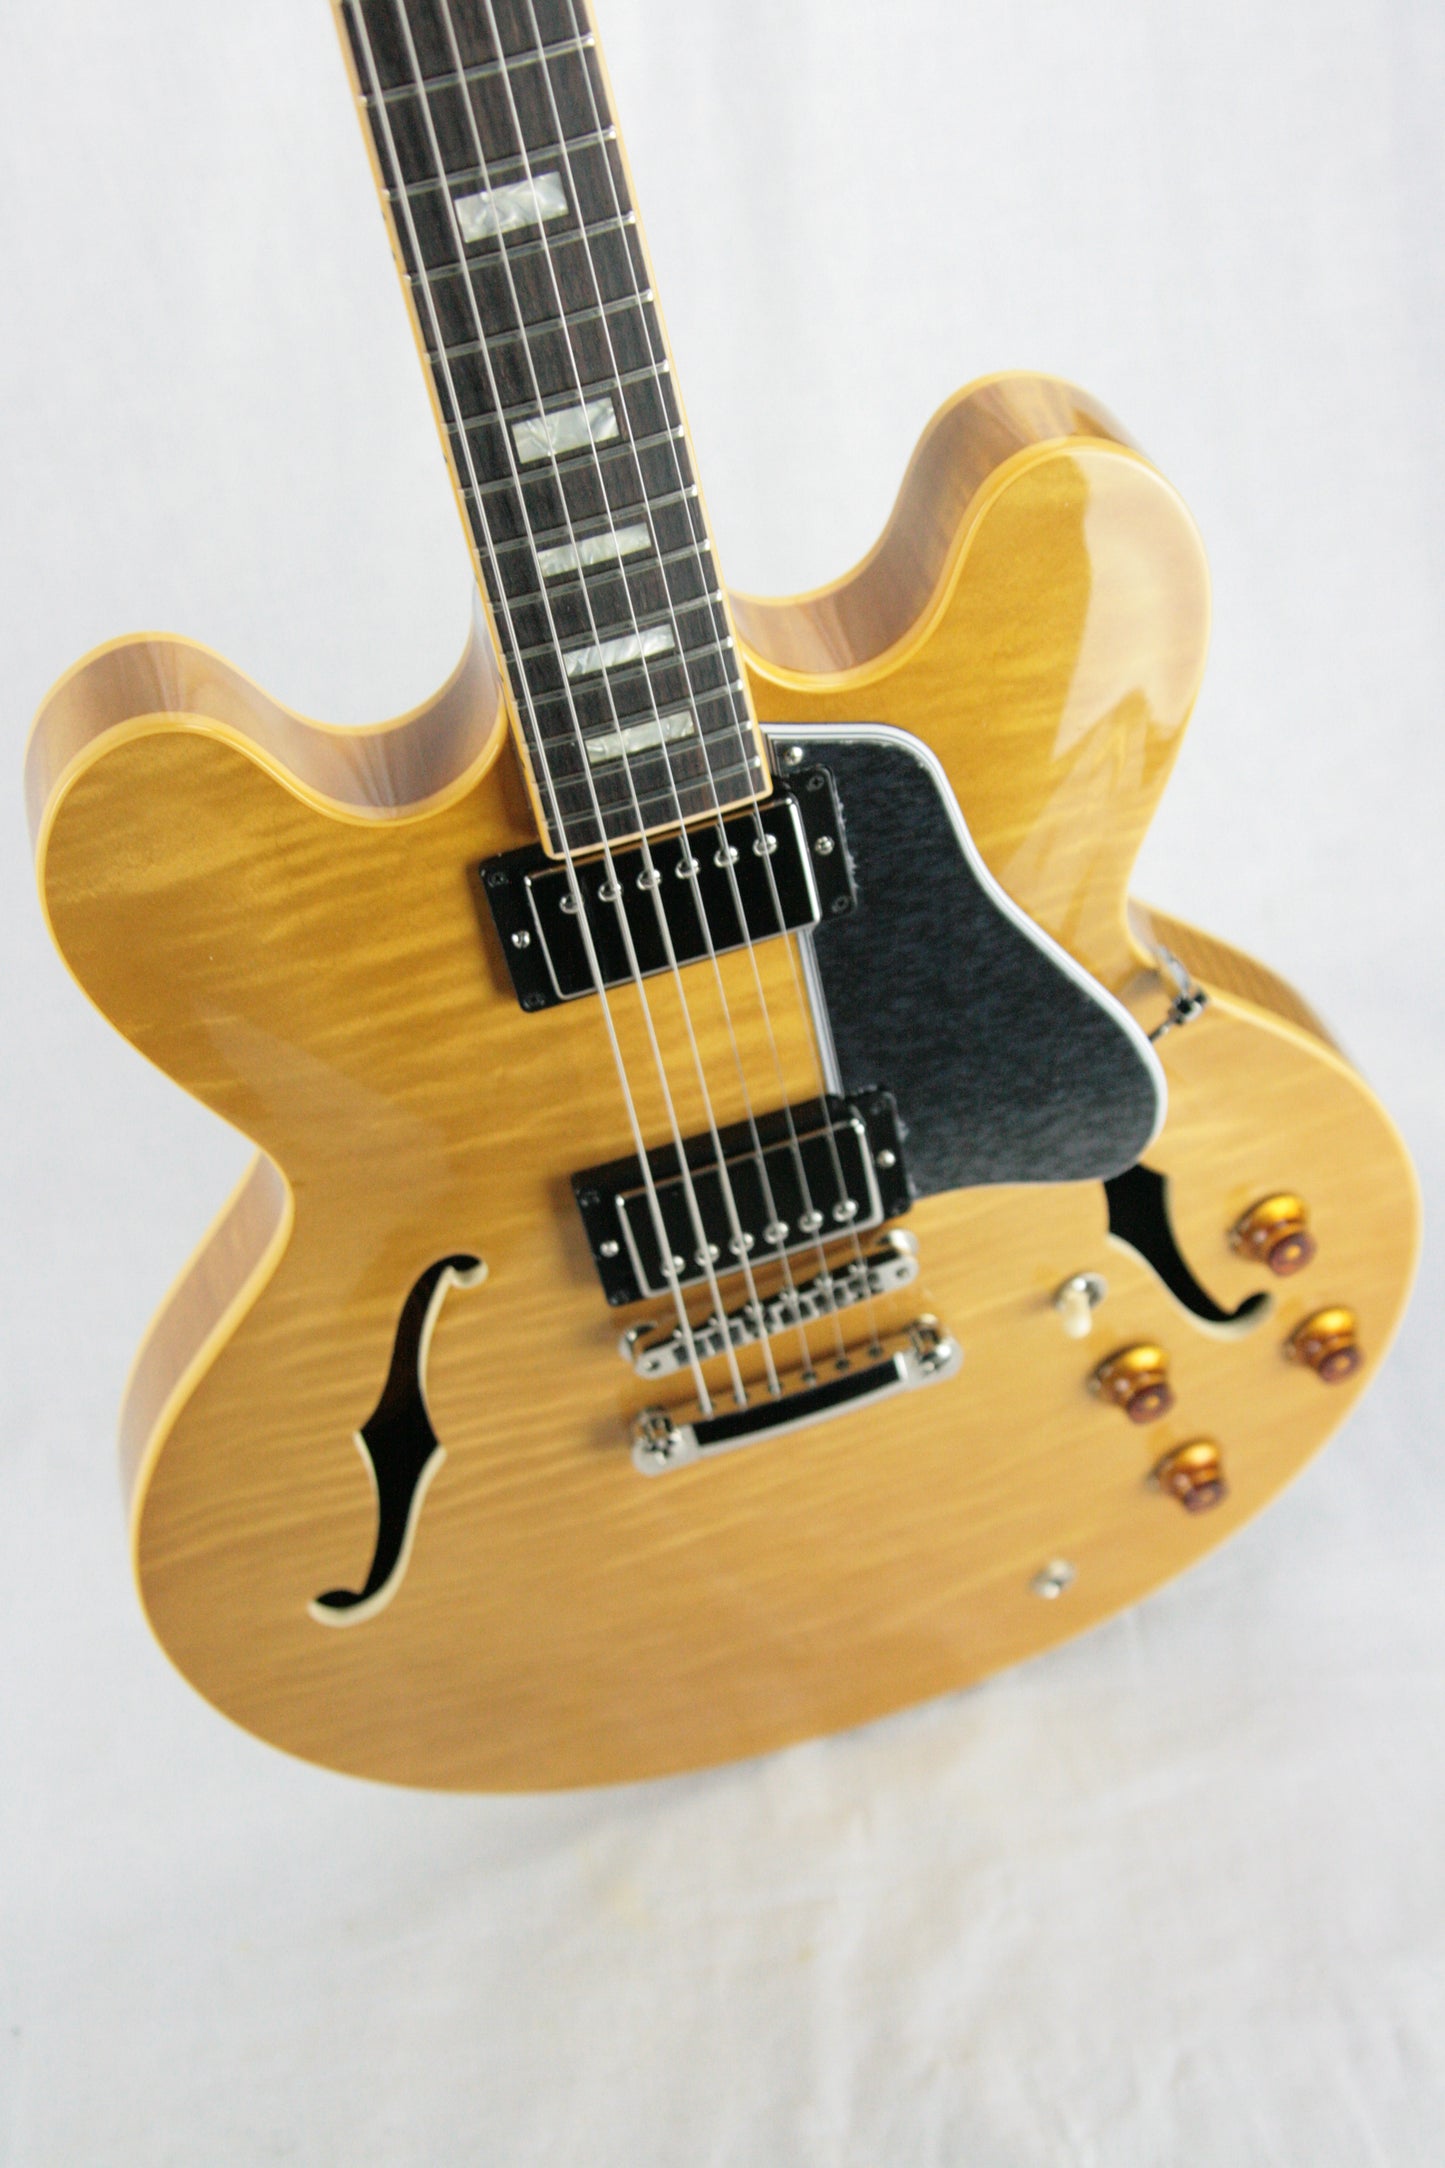 2017 Gibson ES-335 FIGURED DARK VINTAGE NATURAL Flametop! Block inlays! Memphis 345 355